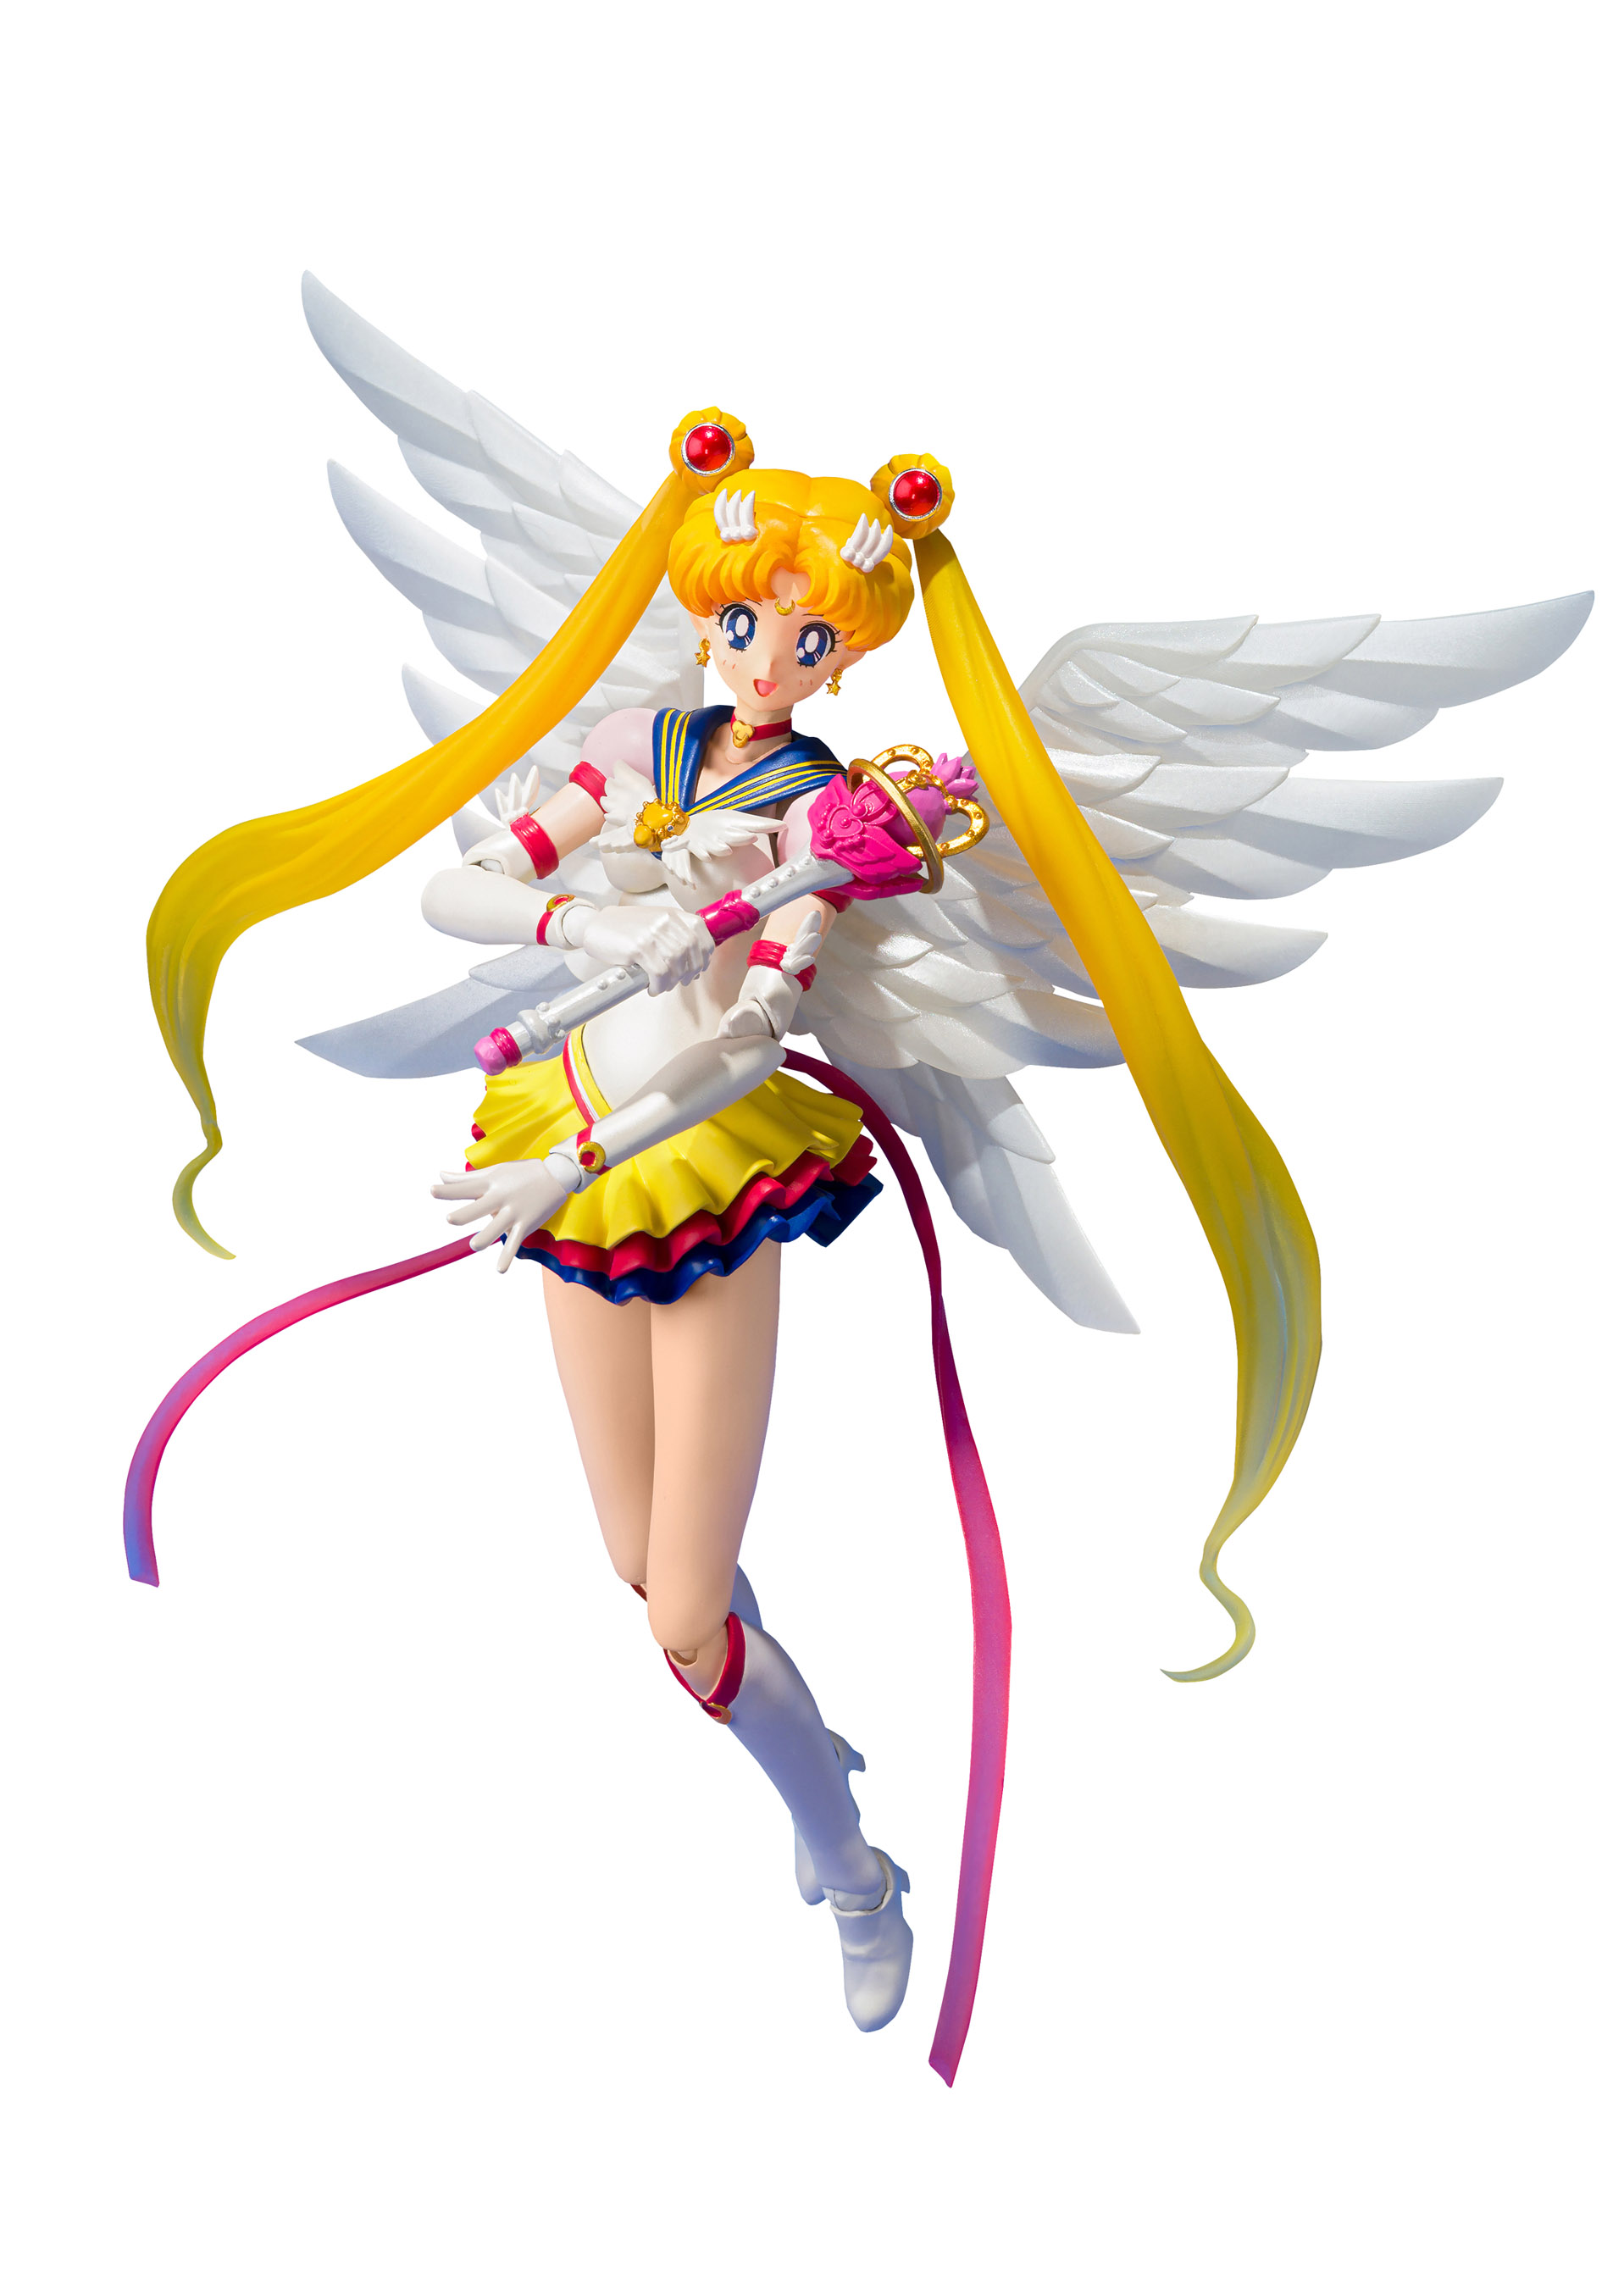 Figuarts: Eternal Sailor Moon "Pretty Guardian Sailor Moon Sailor Stars" 